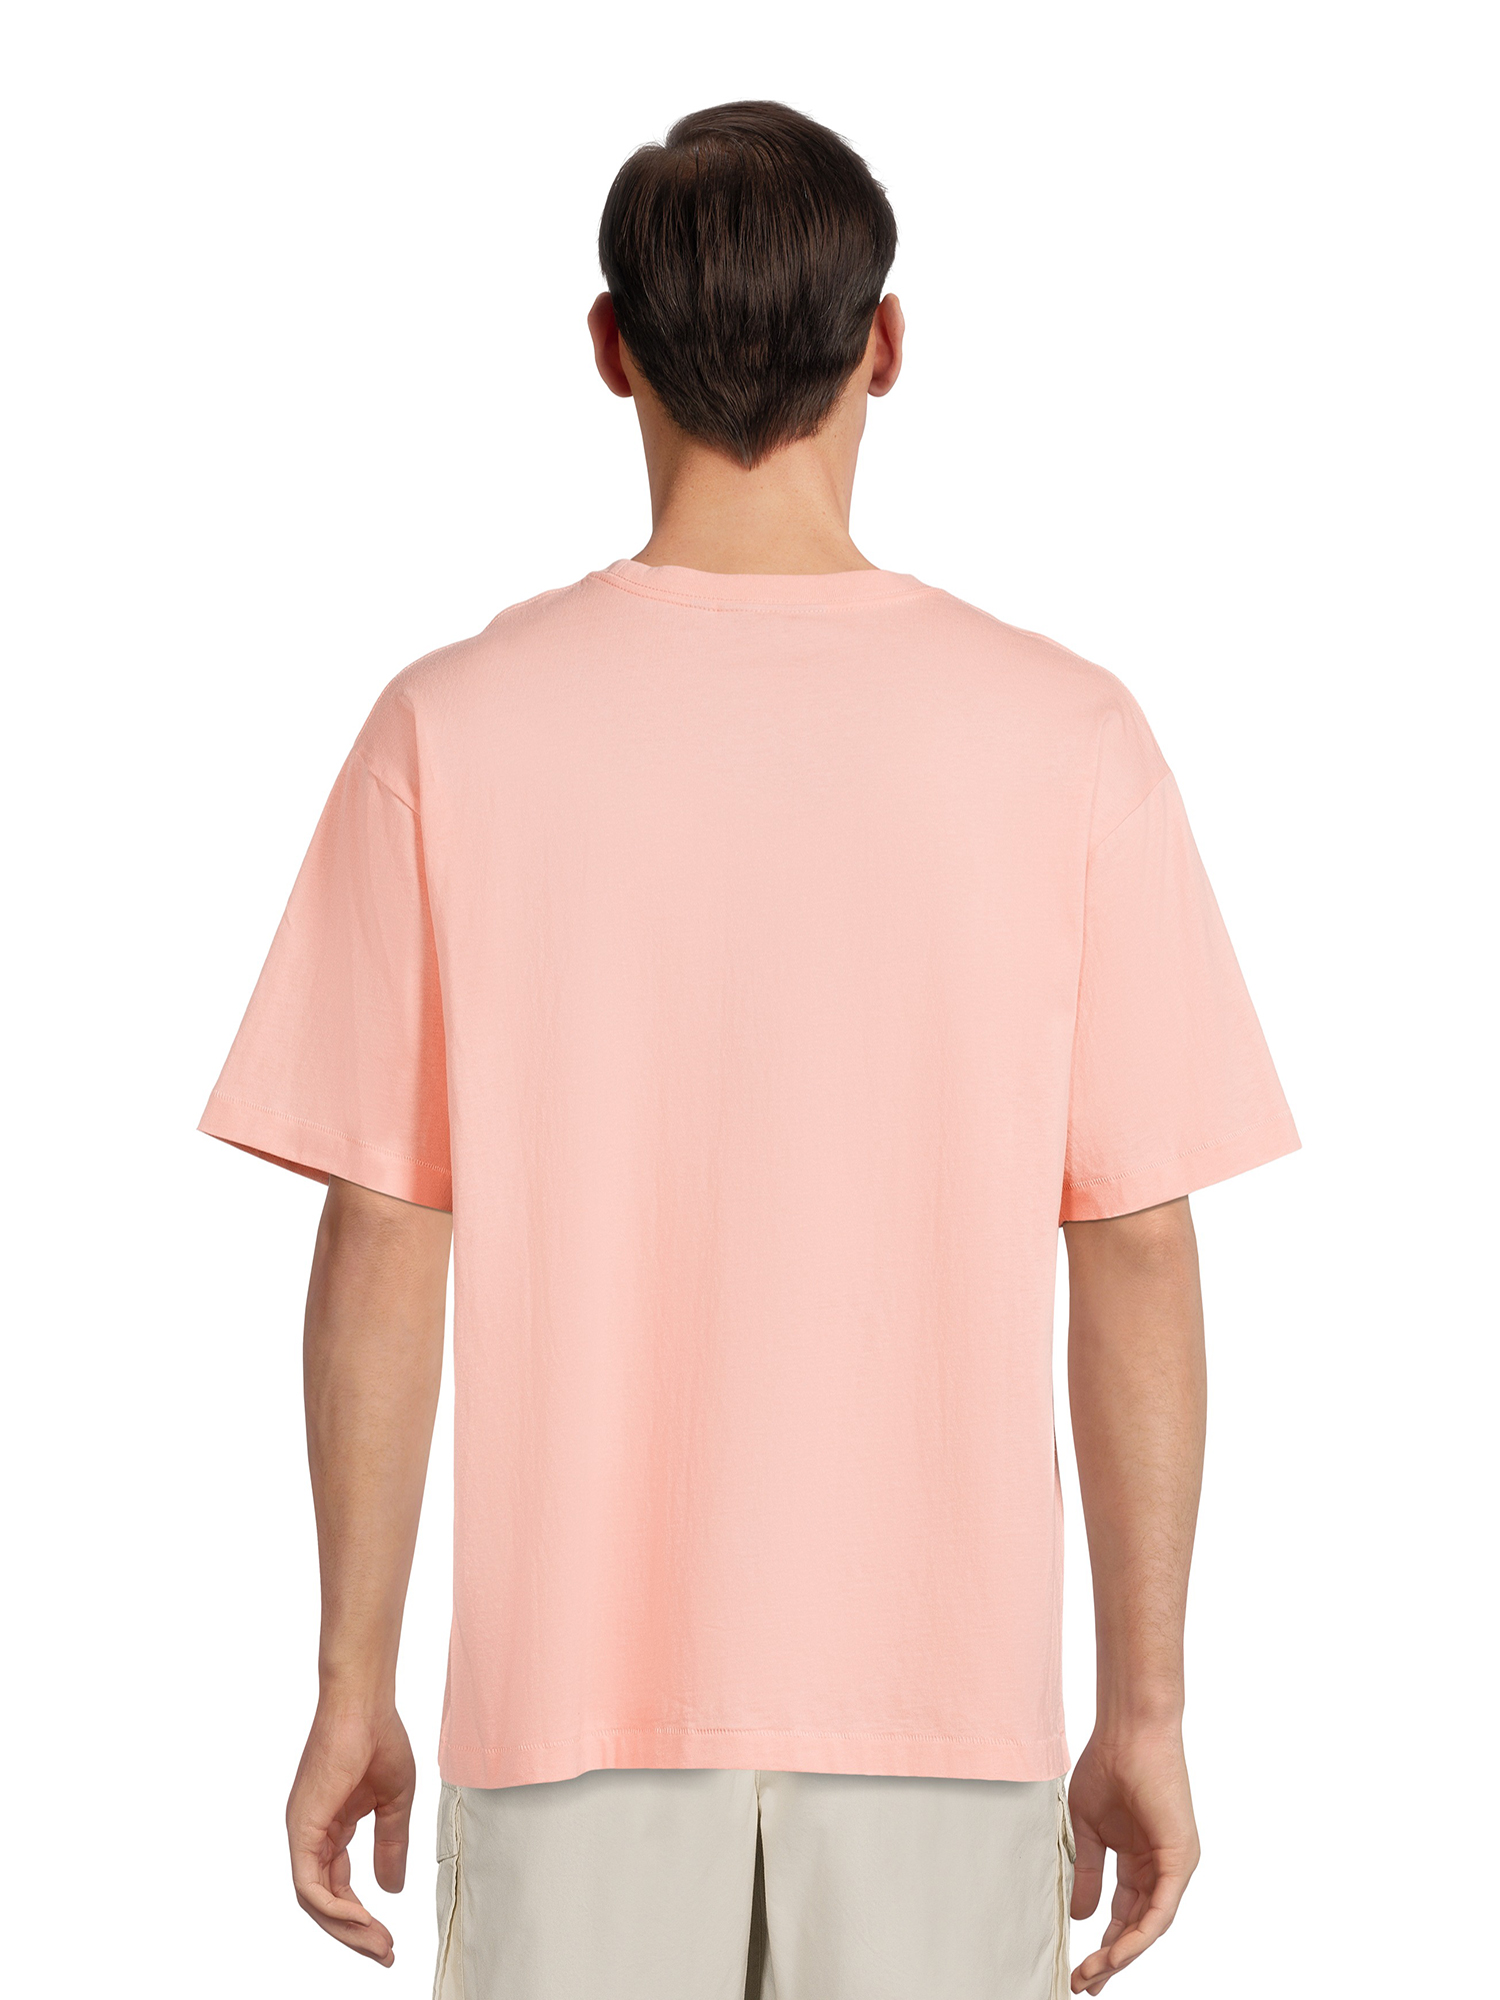 No Boundaries Men's & Big Men's Graphic Oversize Tee Shirt, Sizes XS-3XL - image 5 of 5